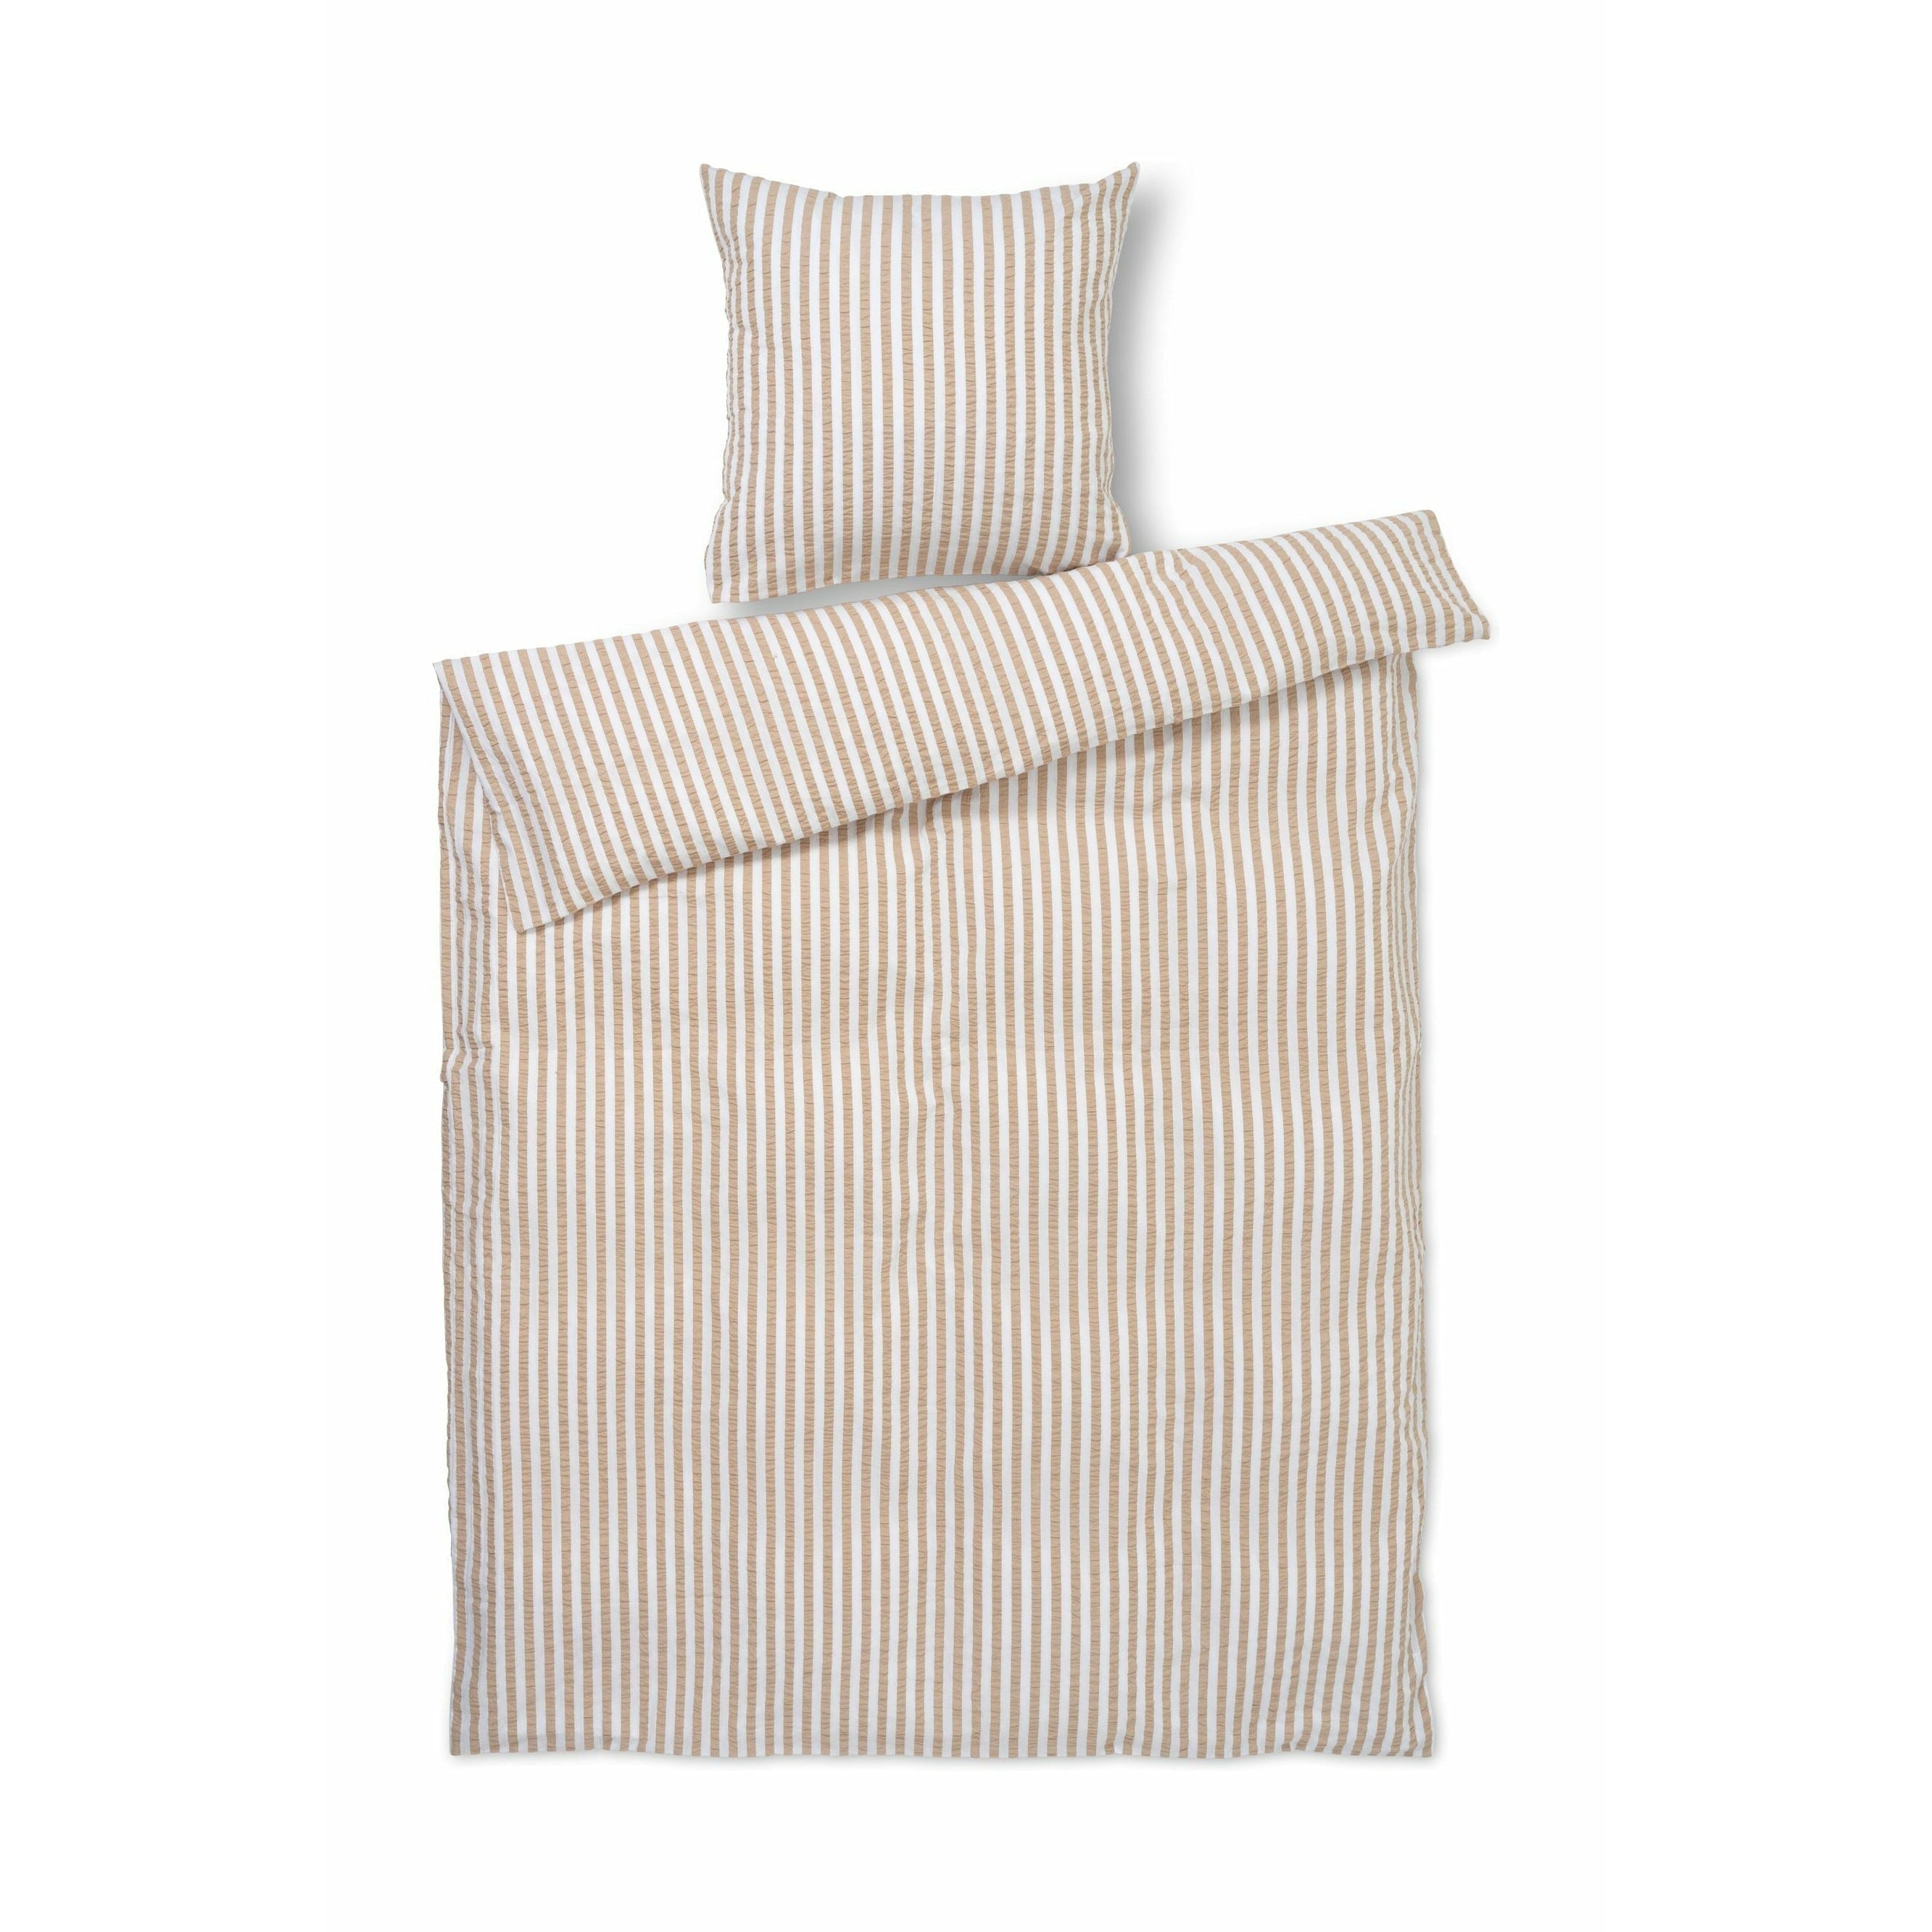 Juna Bæk & Bølge linjer sängkläder 140x220 cm, sand/vit